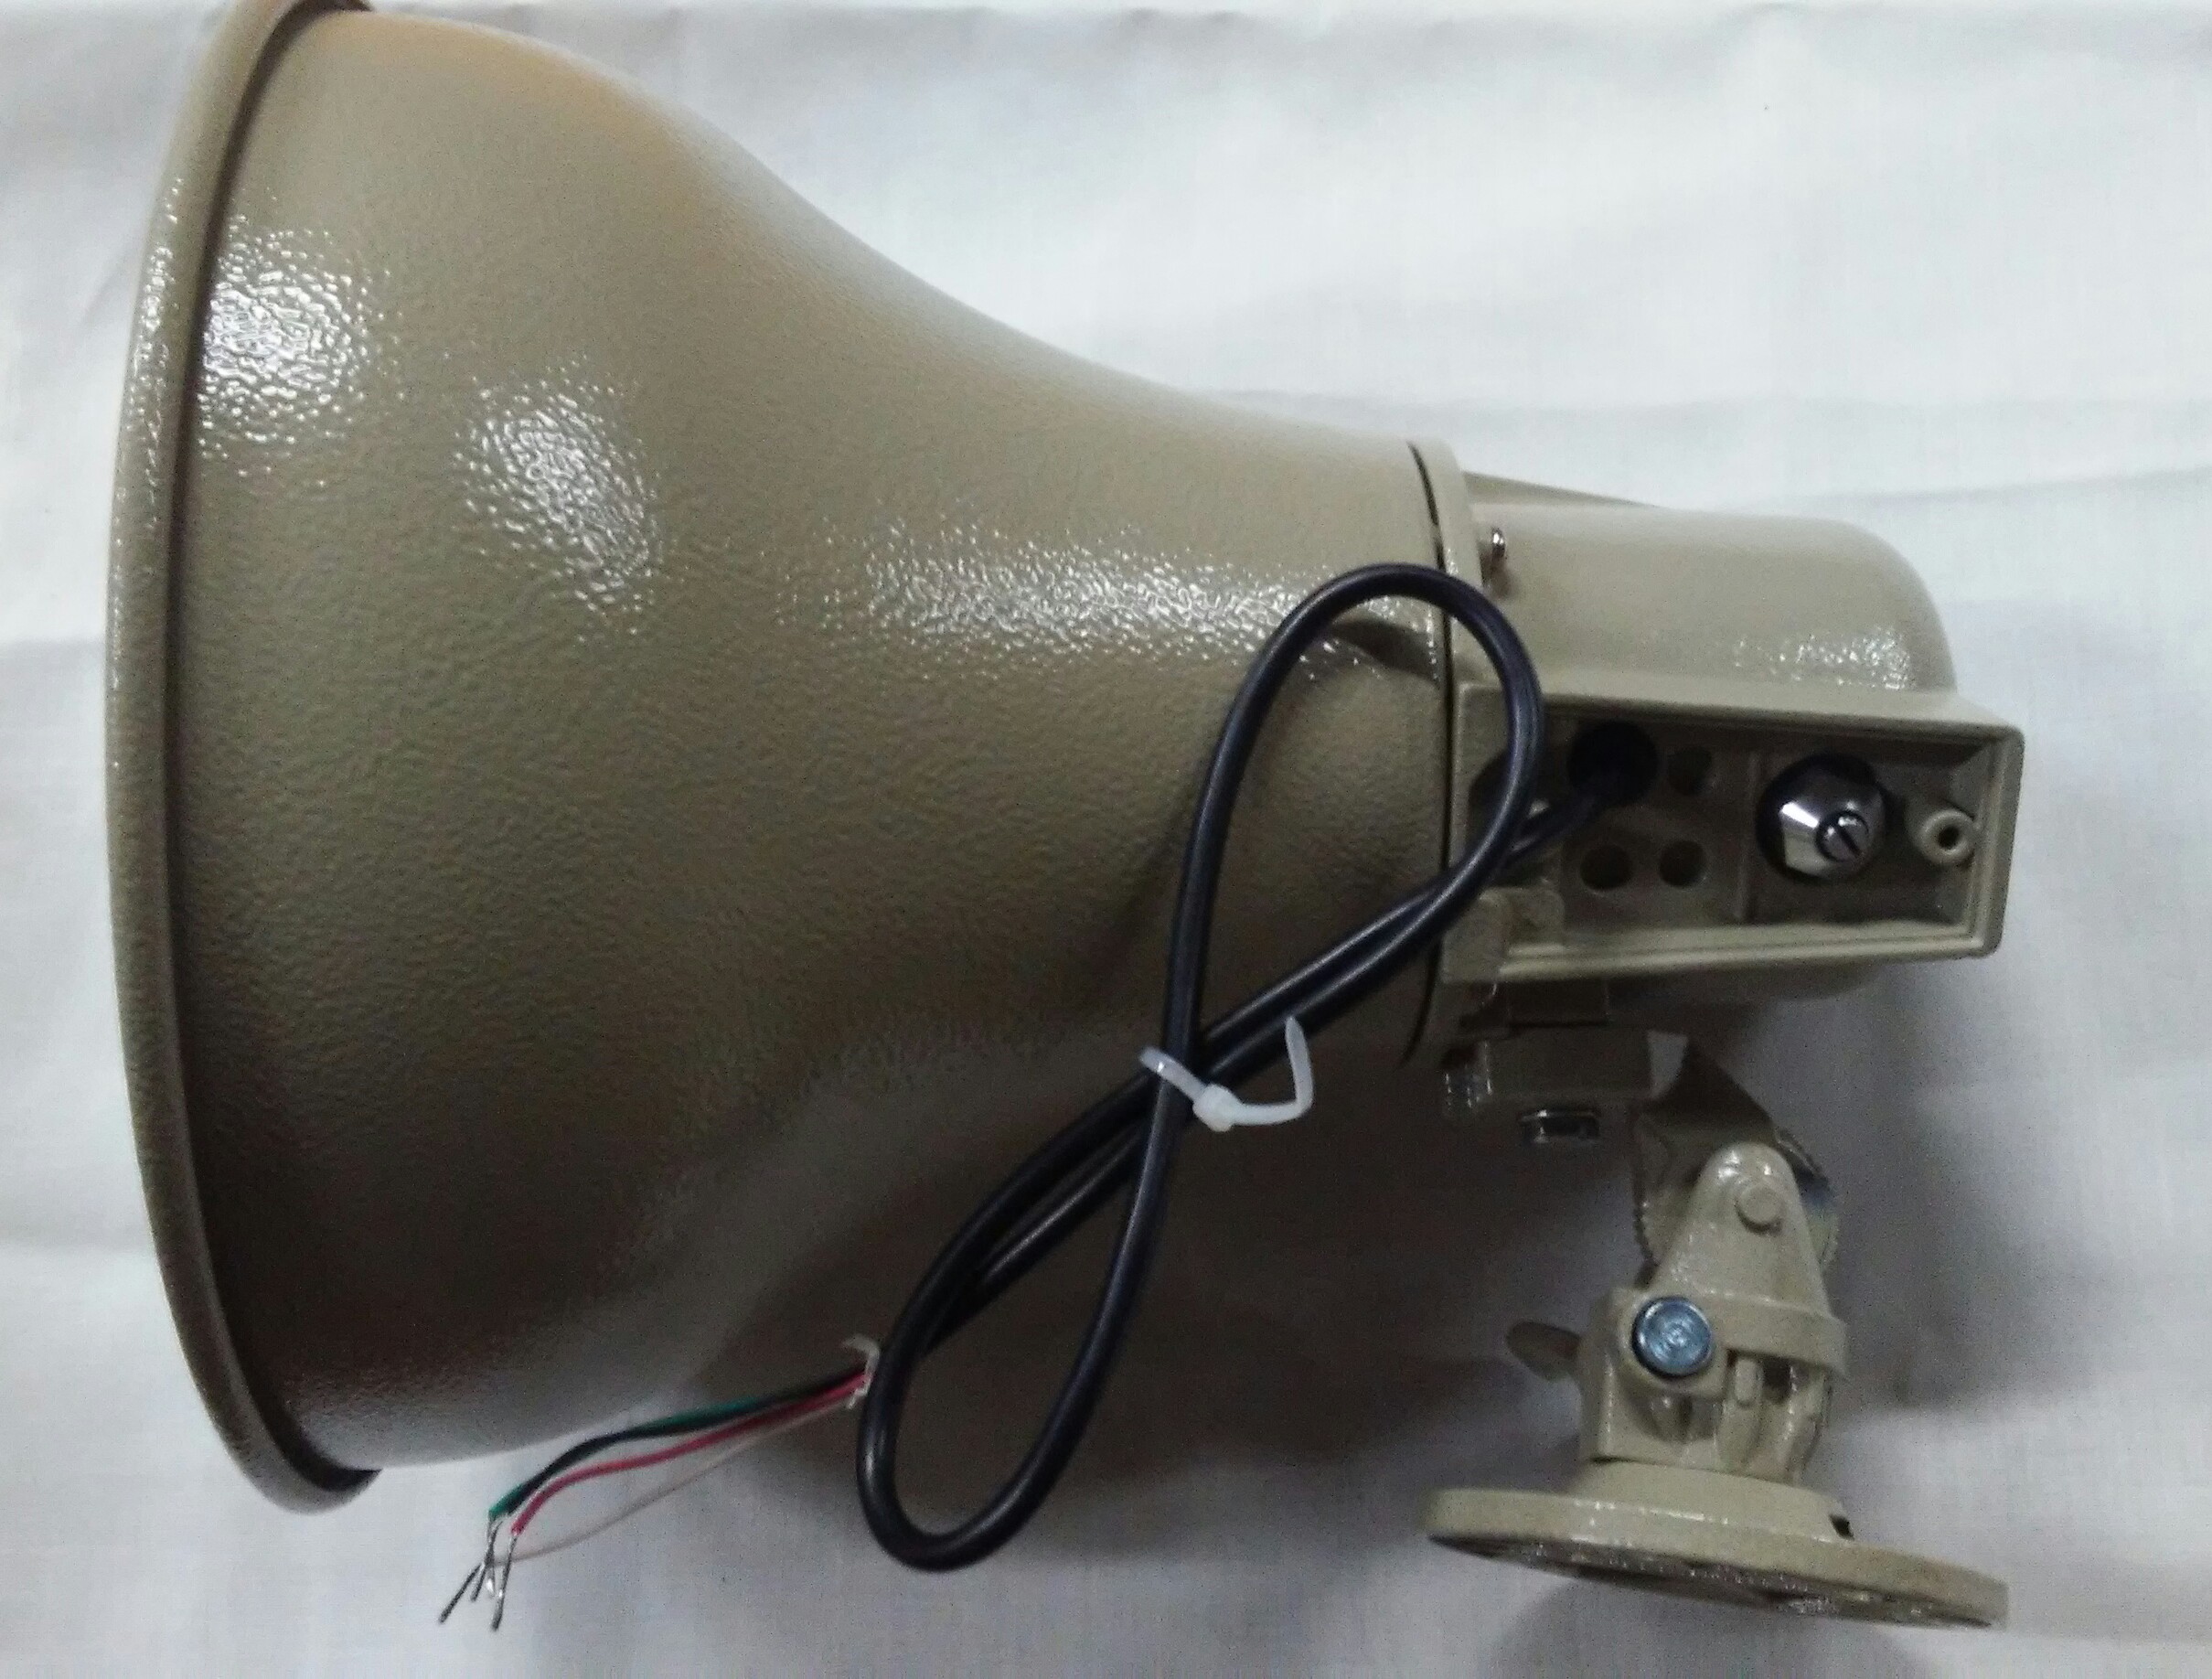 SAH15    15 Watt 24VDC Self Amplified Paging Horn